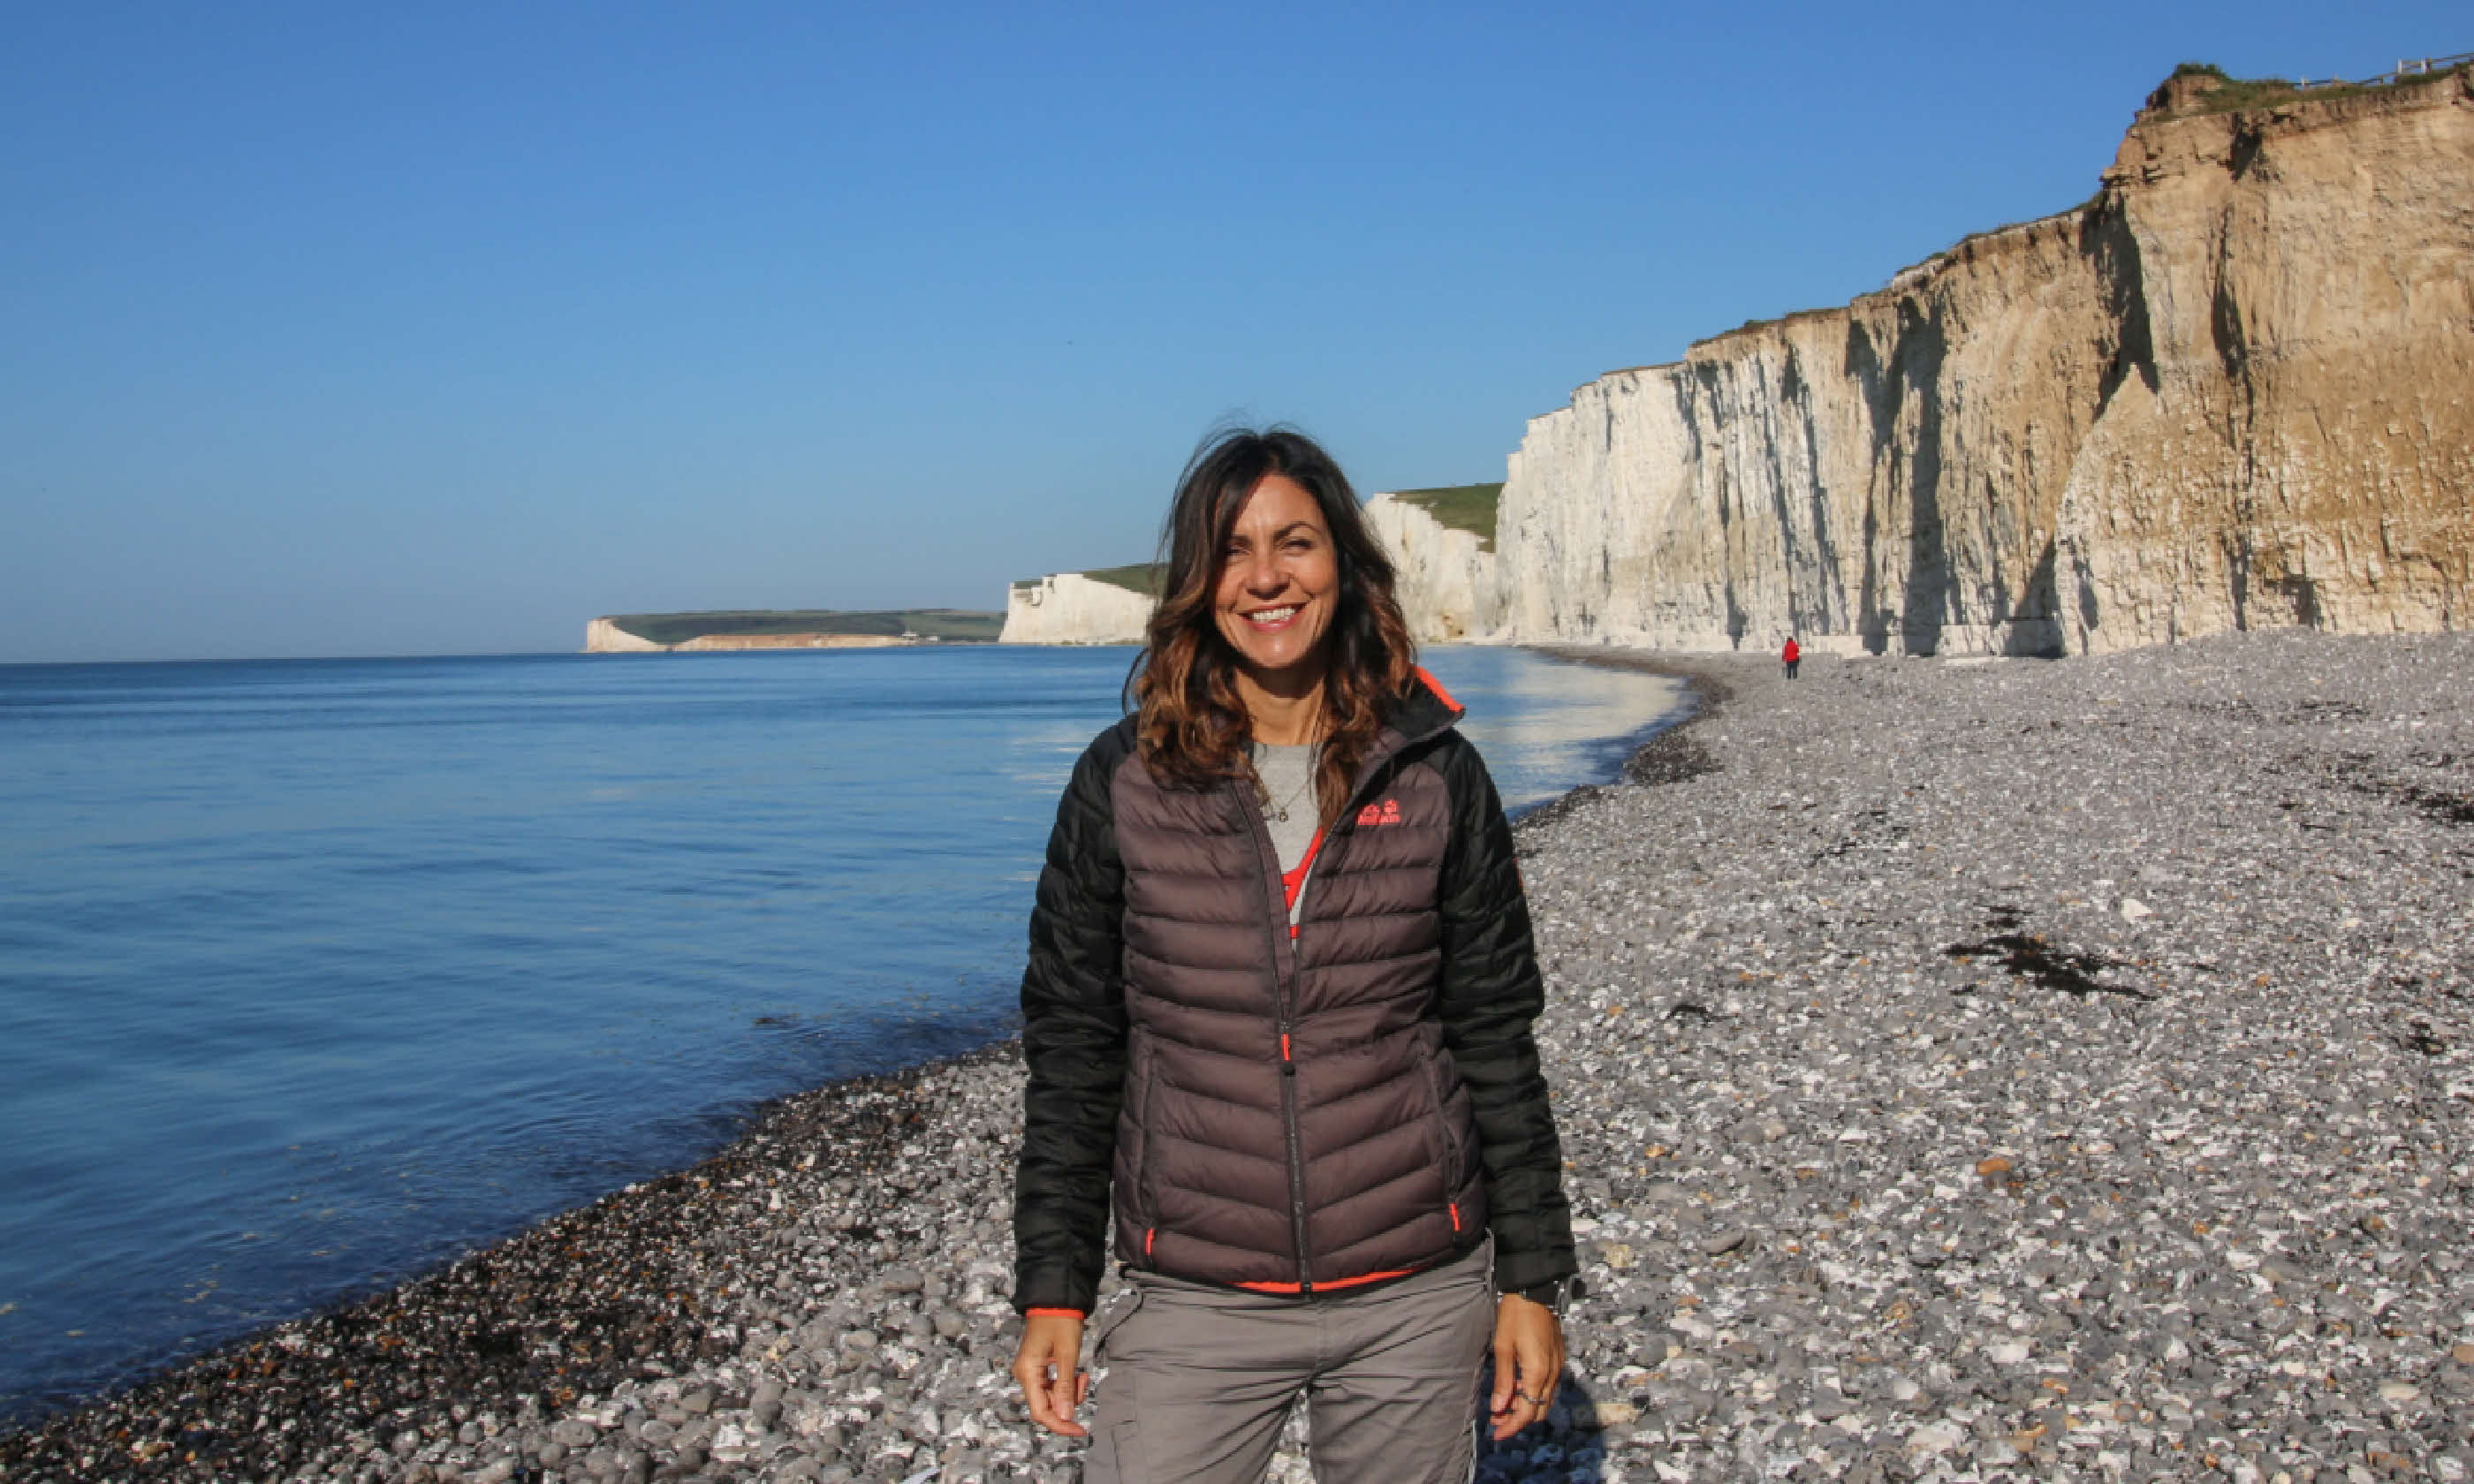 Julia Bradbury interview: Why I love walking in the UK